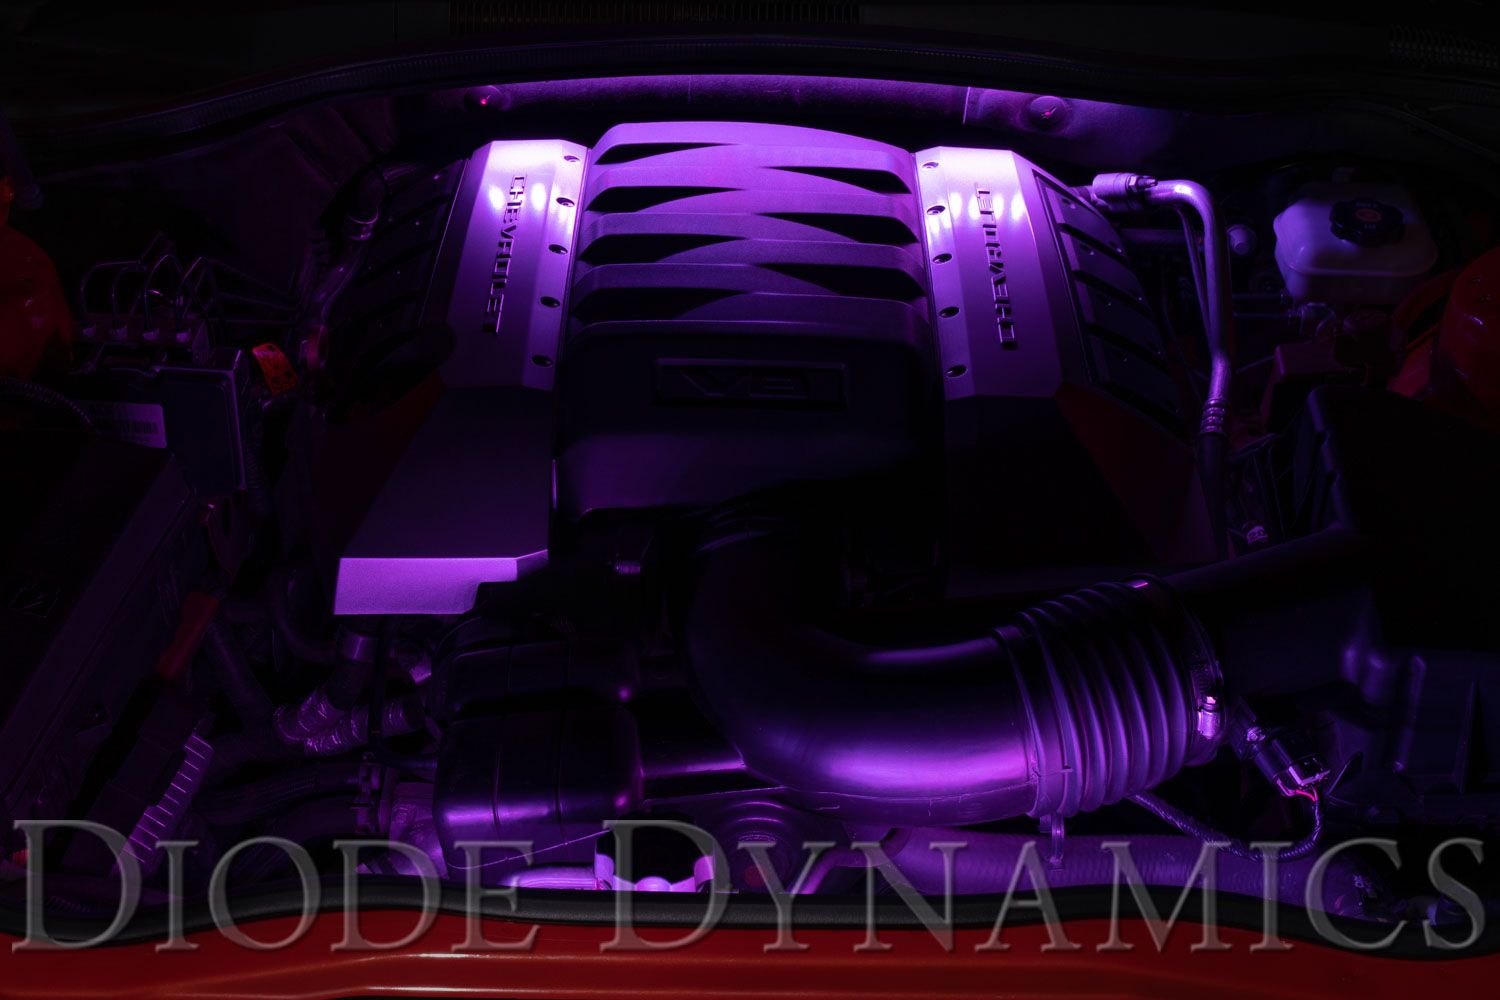 Diode Dynamics RGBW Multicolor Engine Bay LED Kit